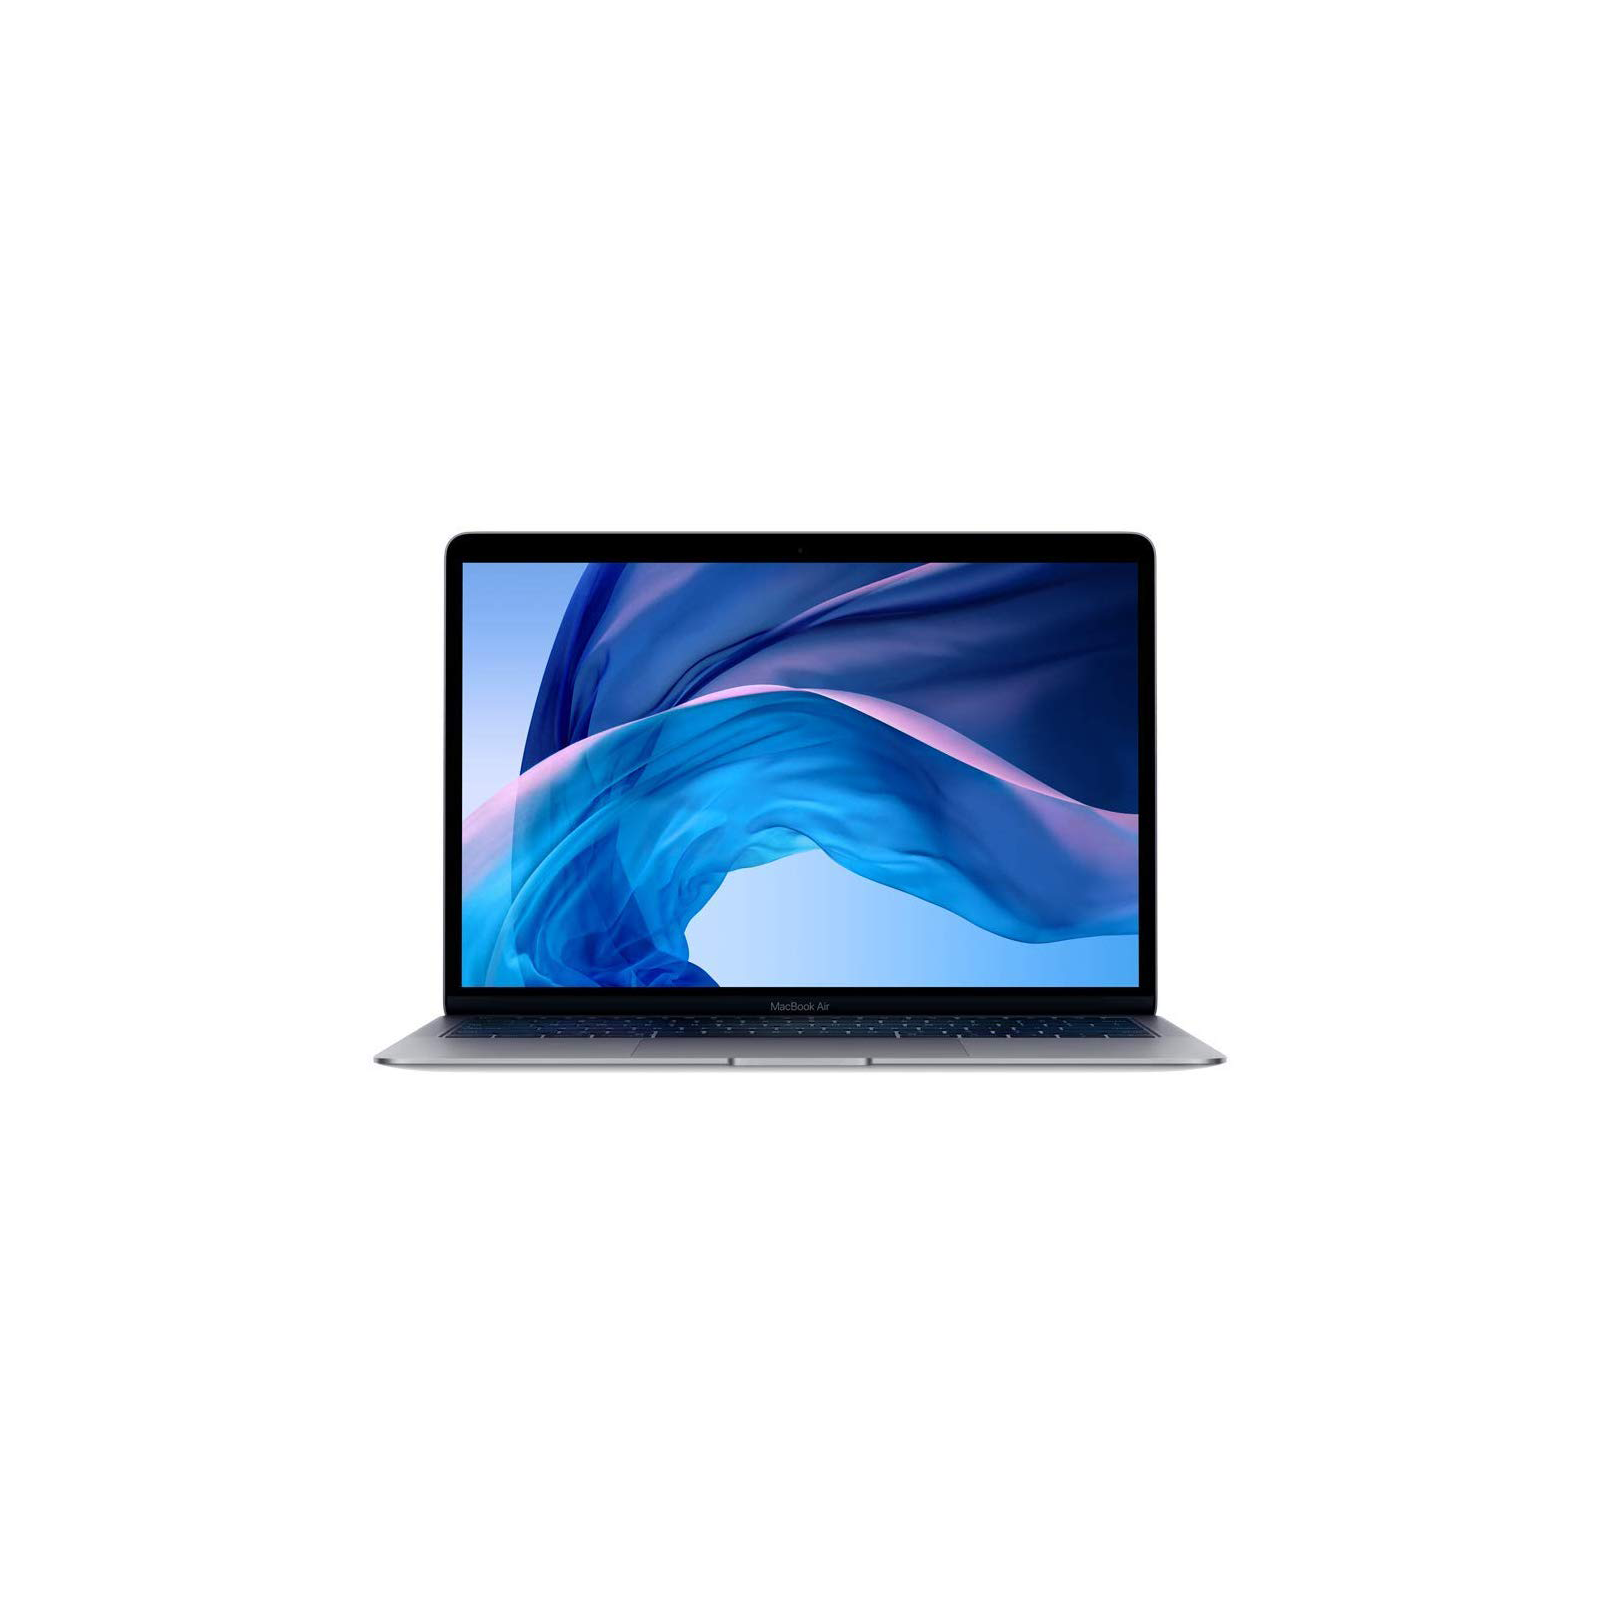 Apple MacBook Air | Best Ultralight Portable Laptop 2019